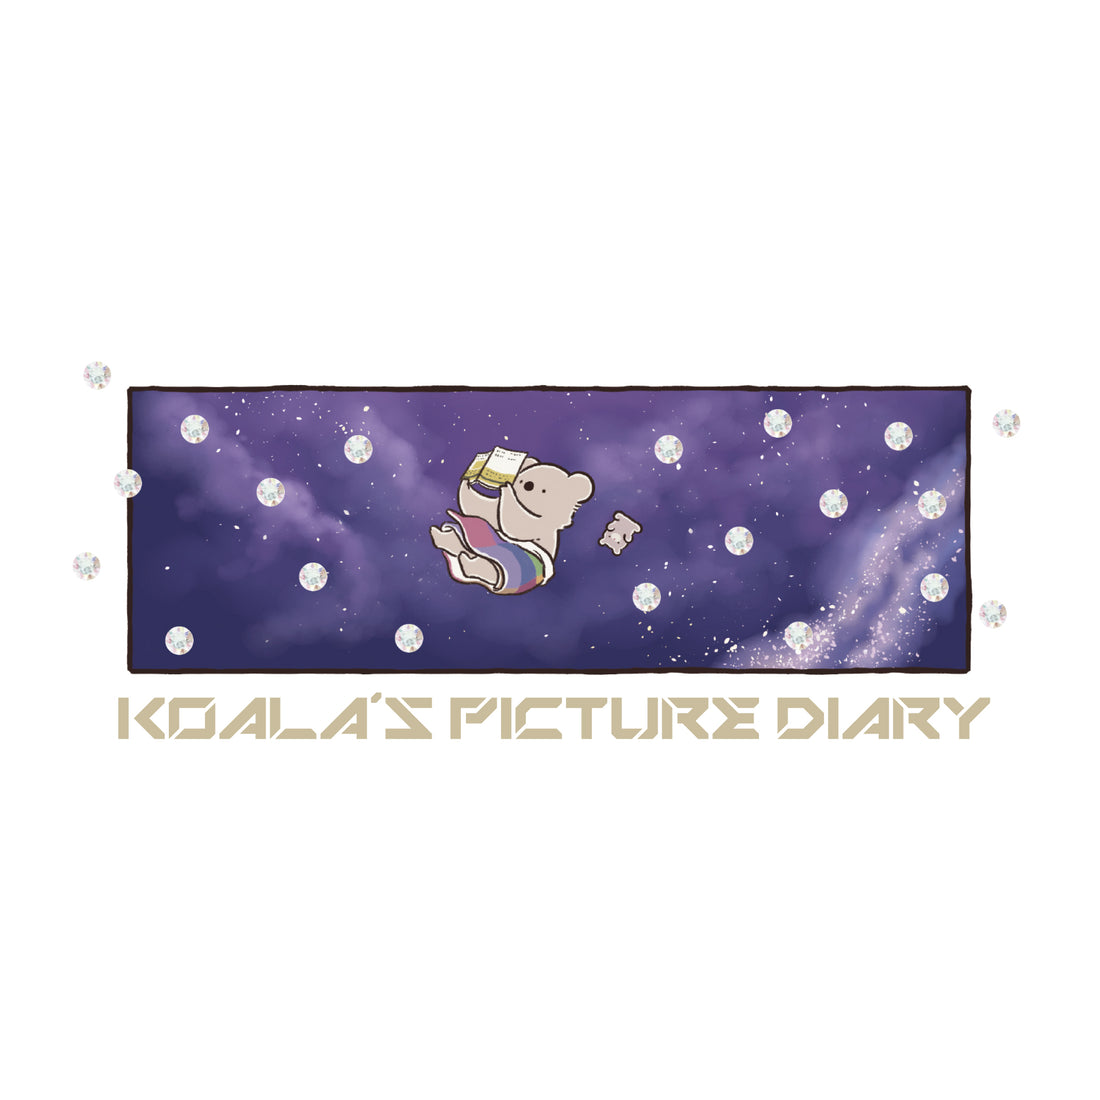 HBMG x Koala Picture Diary Crystal Design Illustration